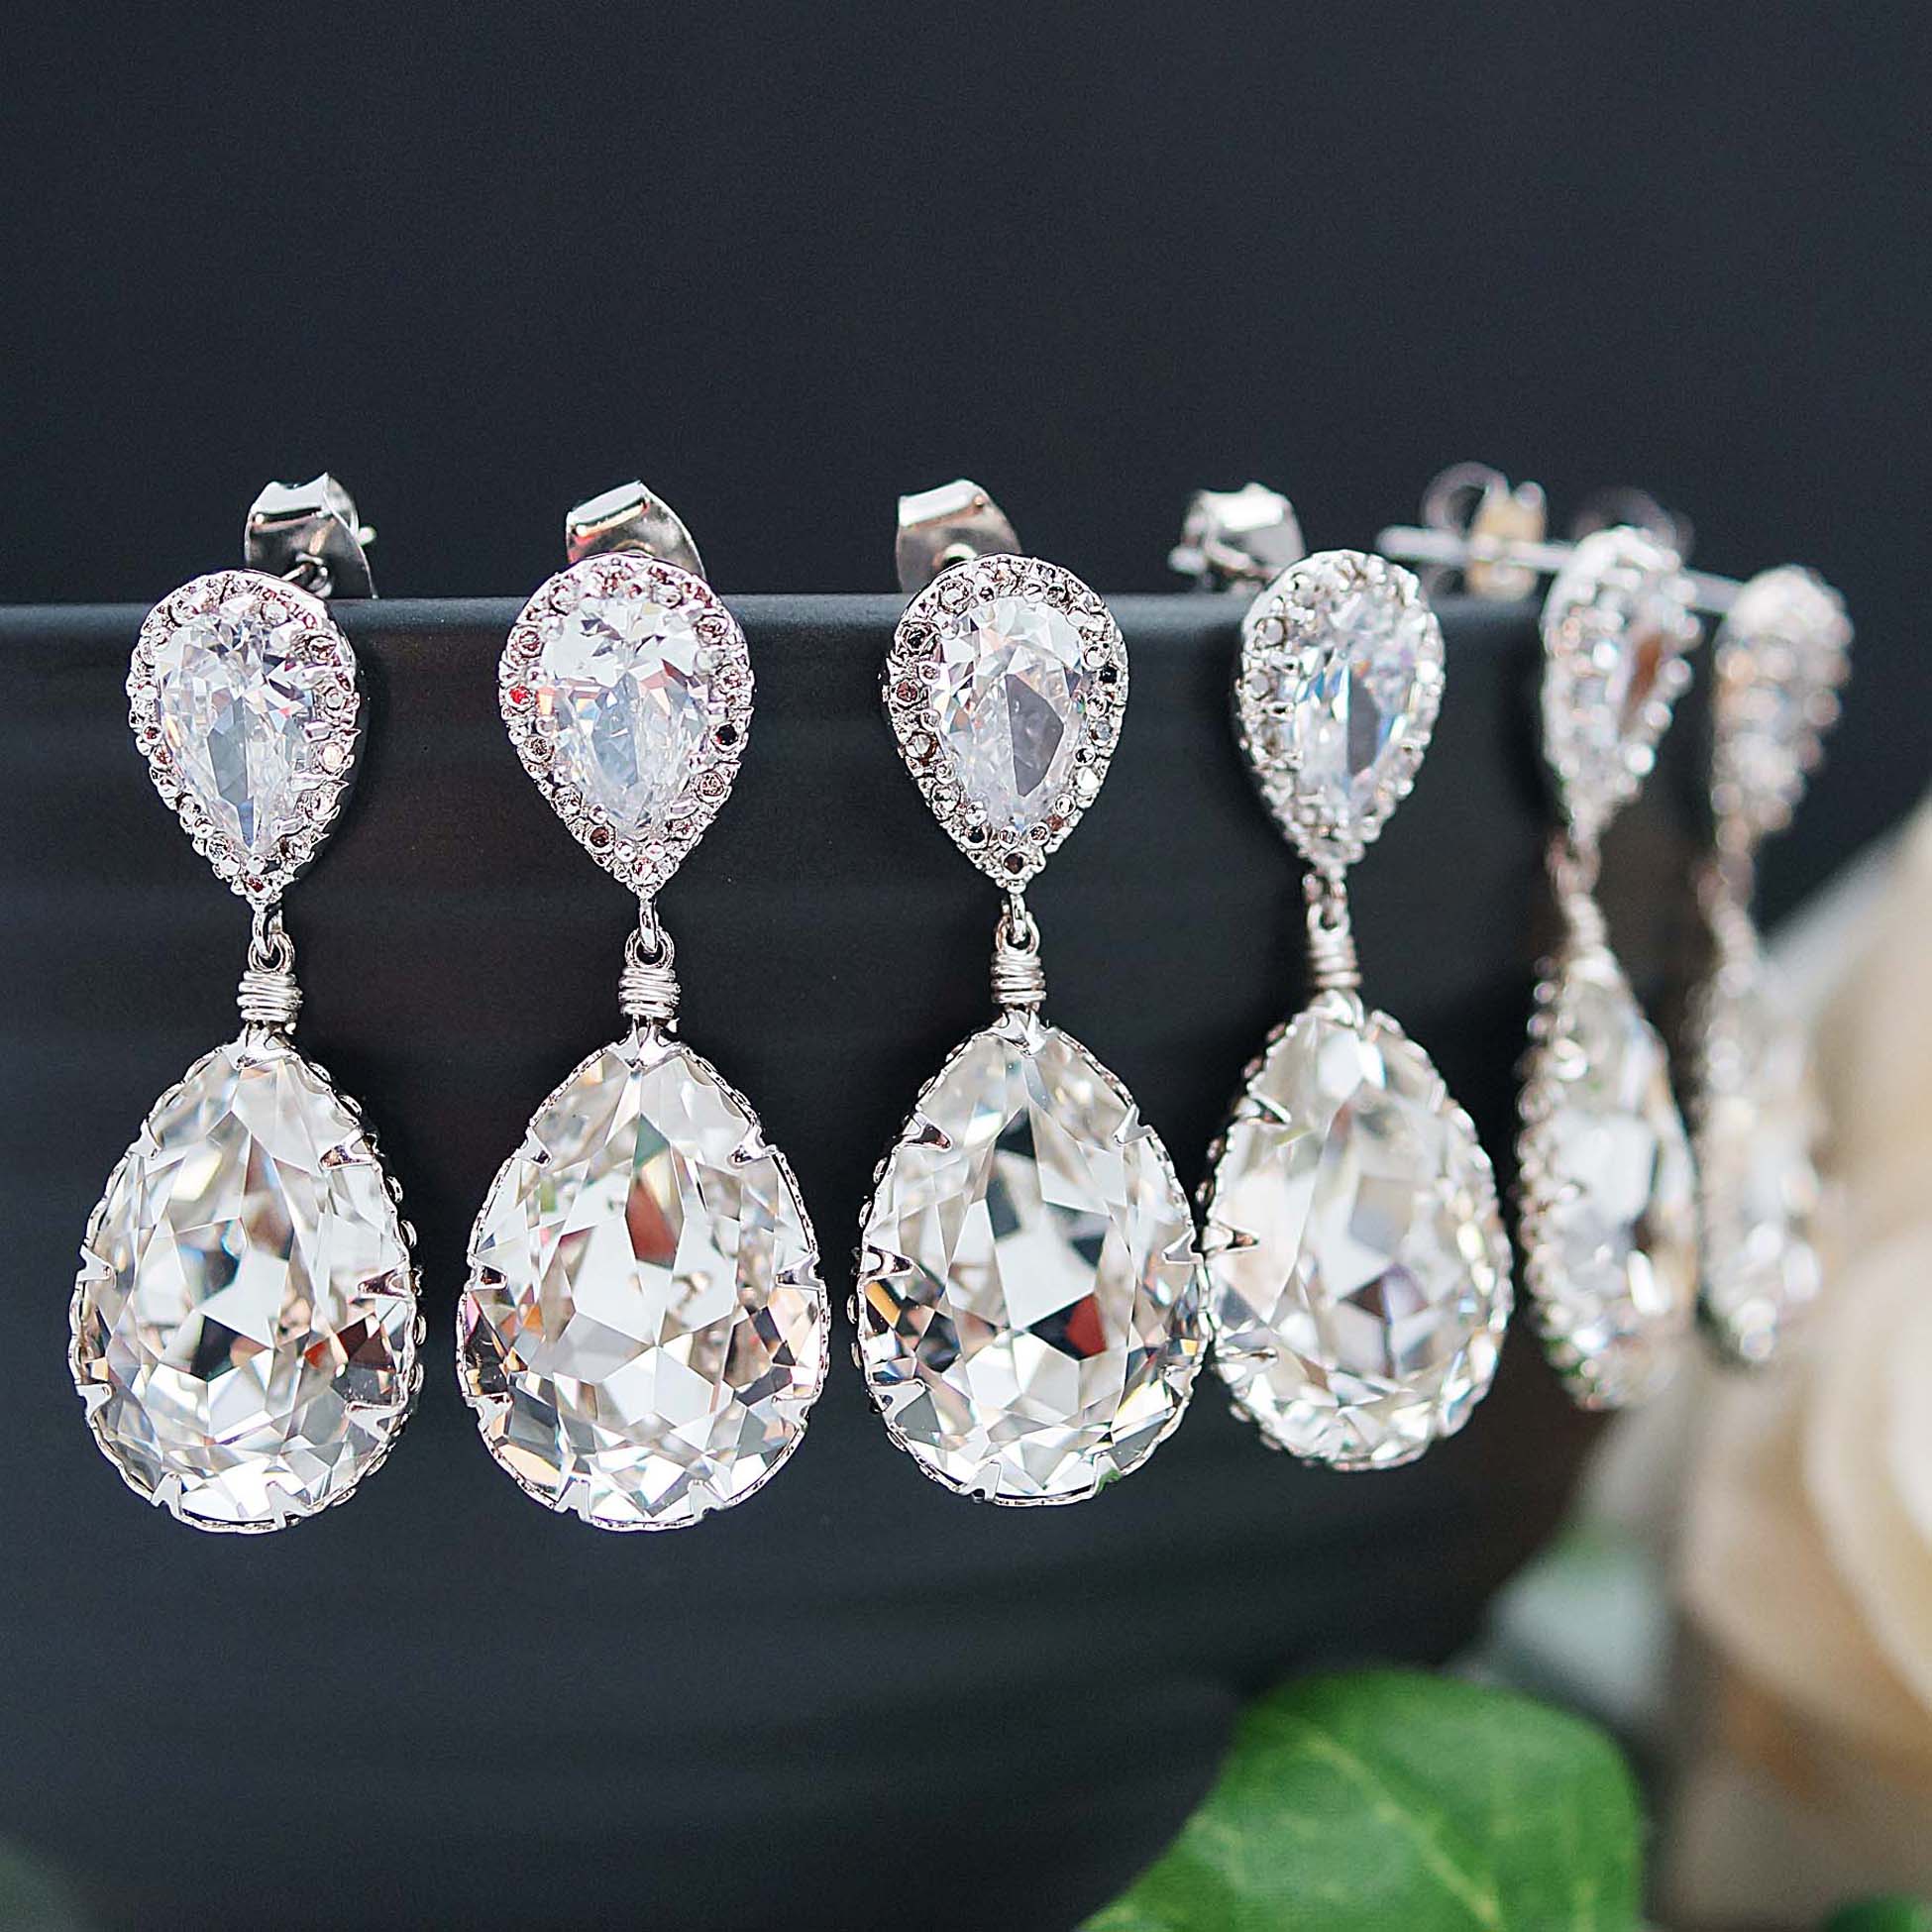 Swarovski Earrings - Elizabeth Anne Designs: The Wedding Blog